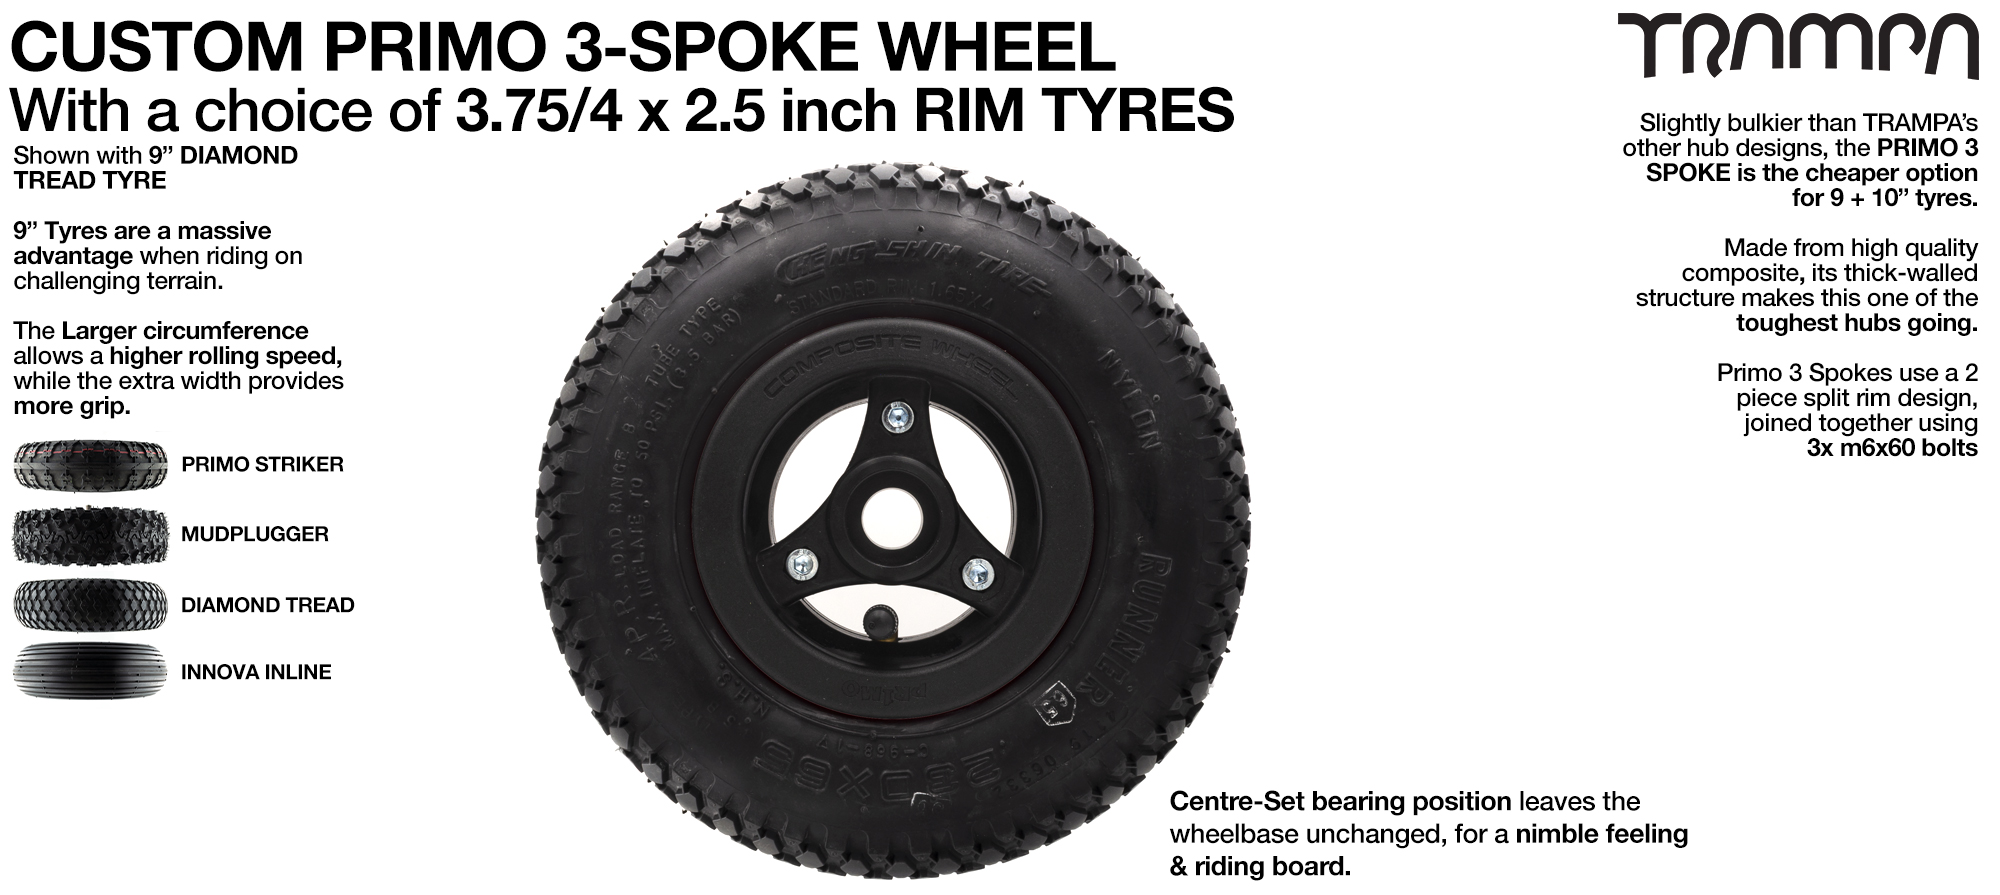 Custom 9 inch Primo Wheel - Primo 3 Spoke composite Hub with 9 Inch Tyre